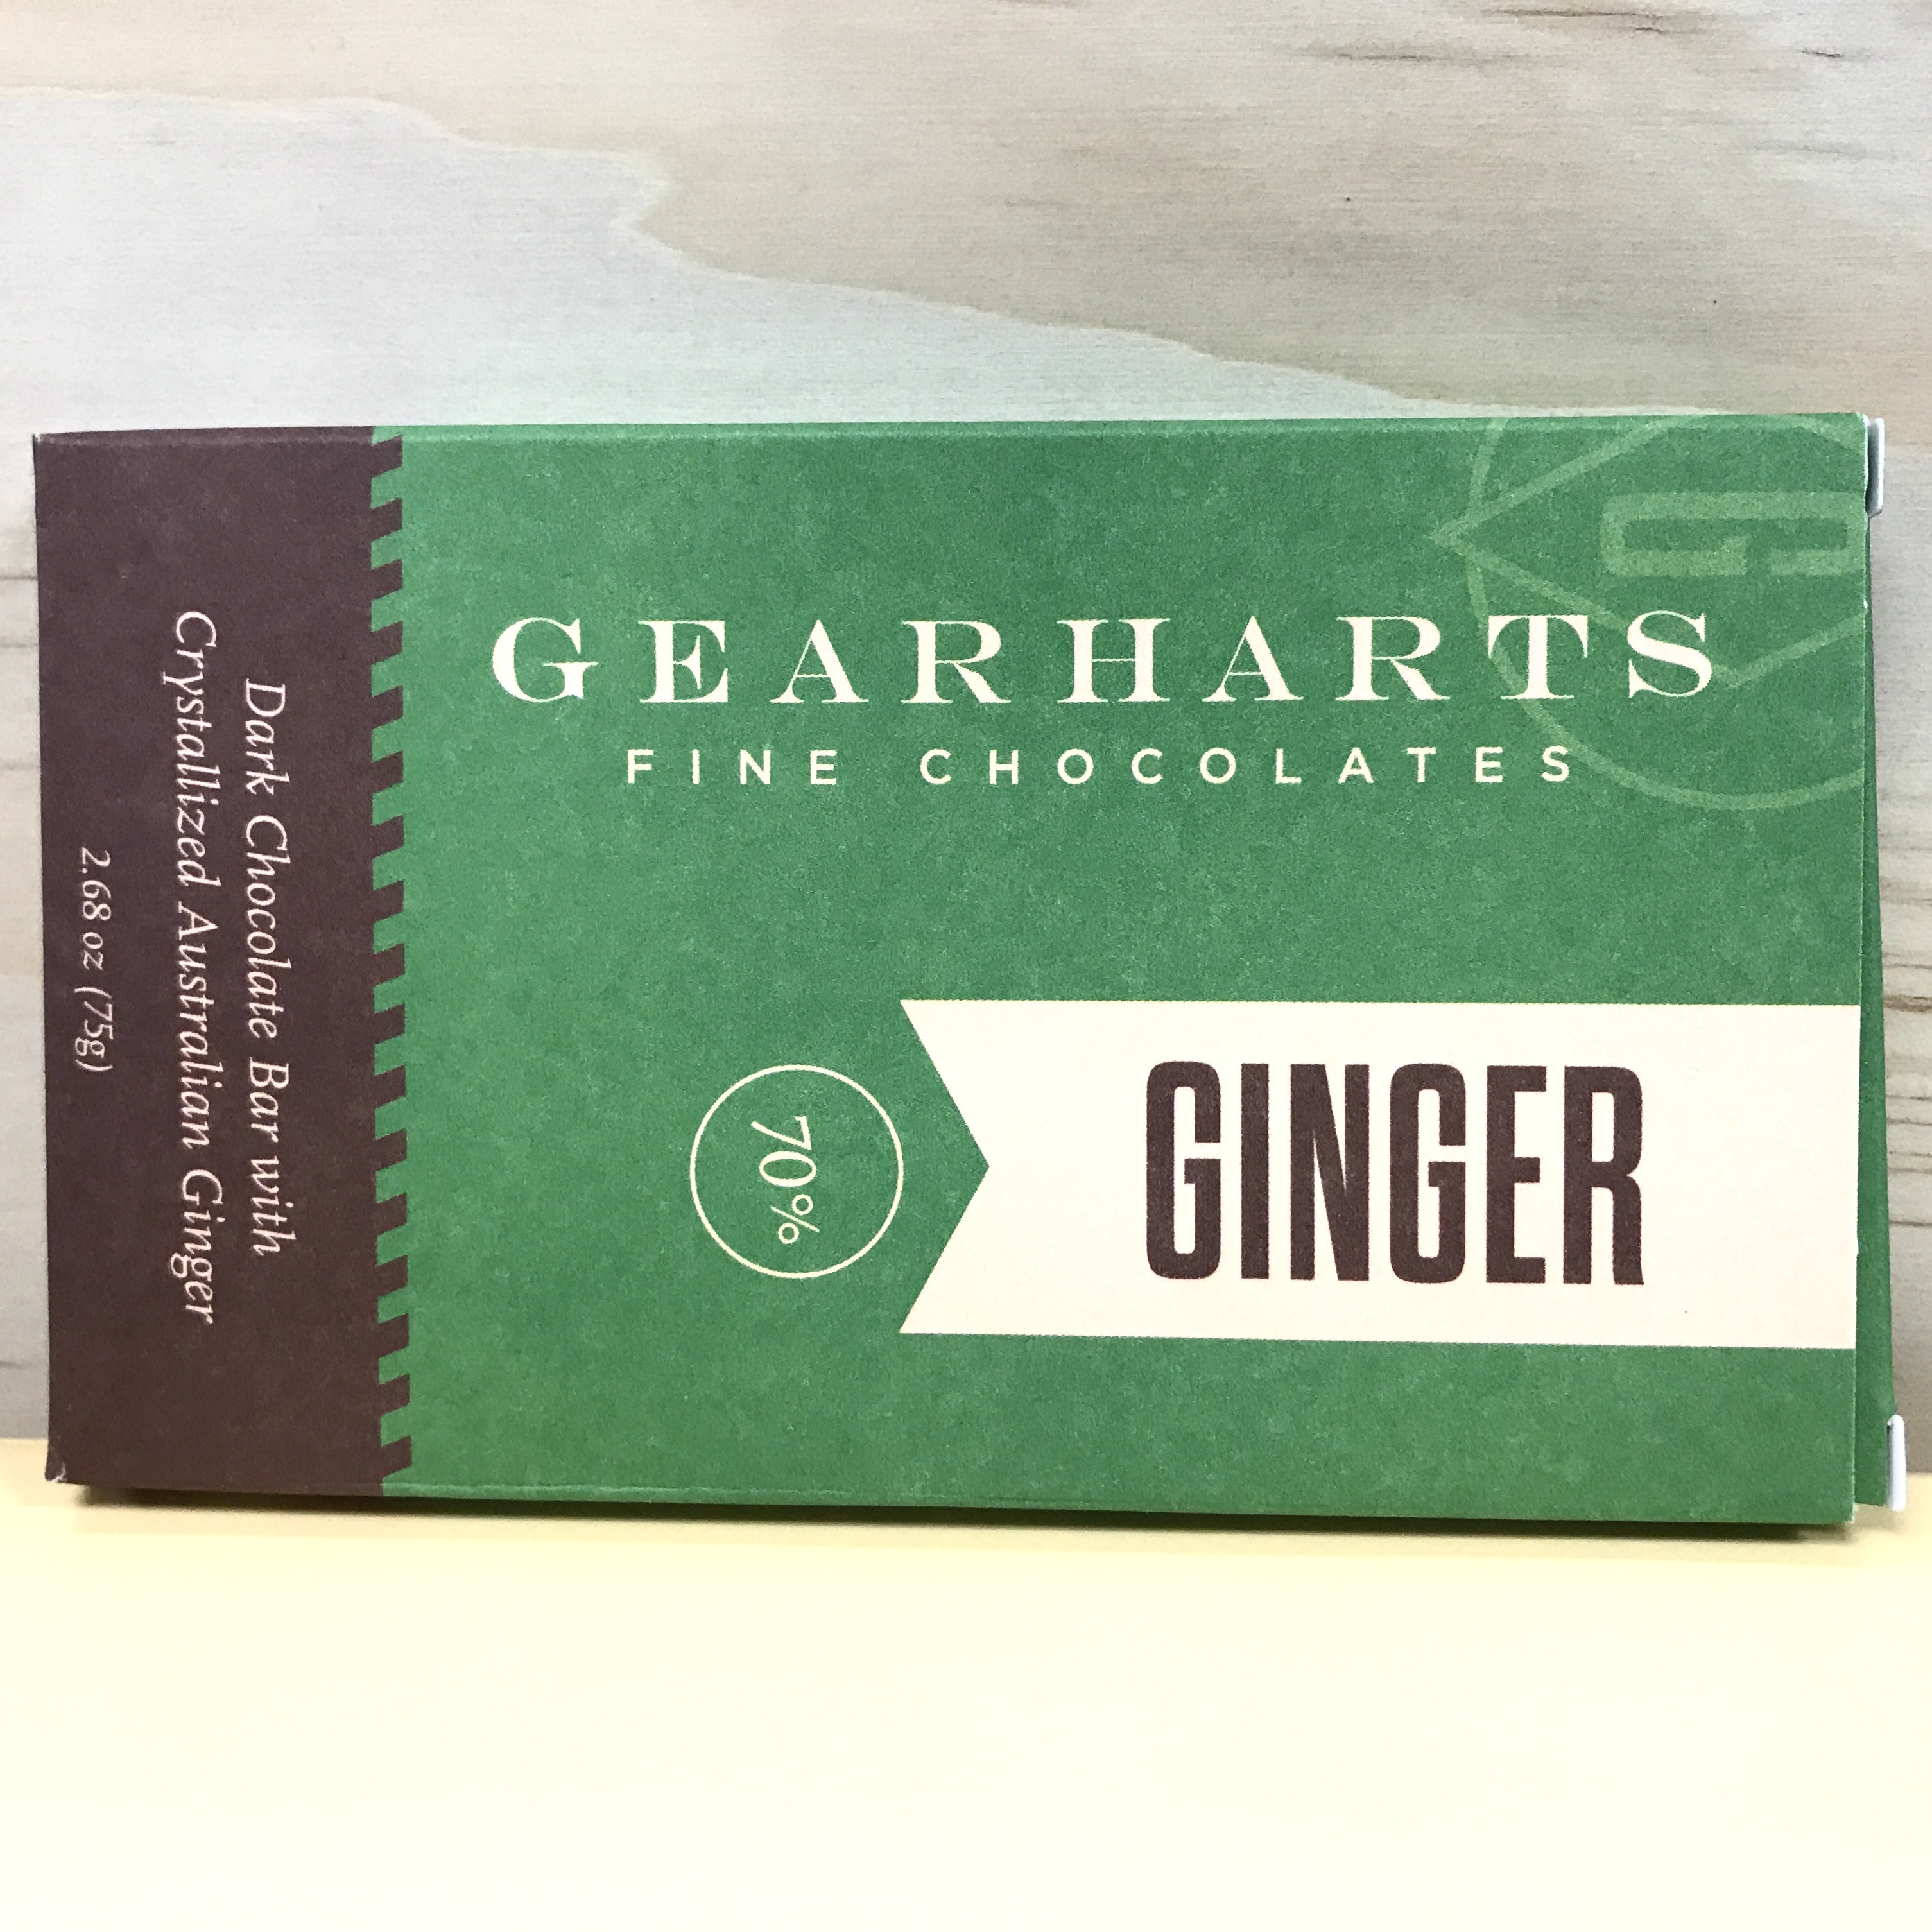 Gearharts Ginger Chocolate Bar